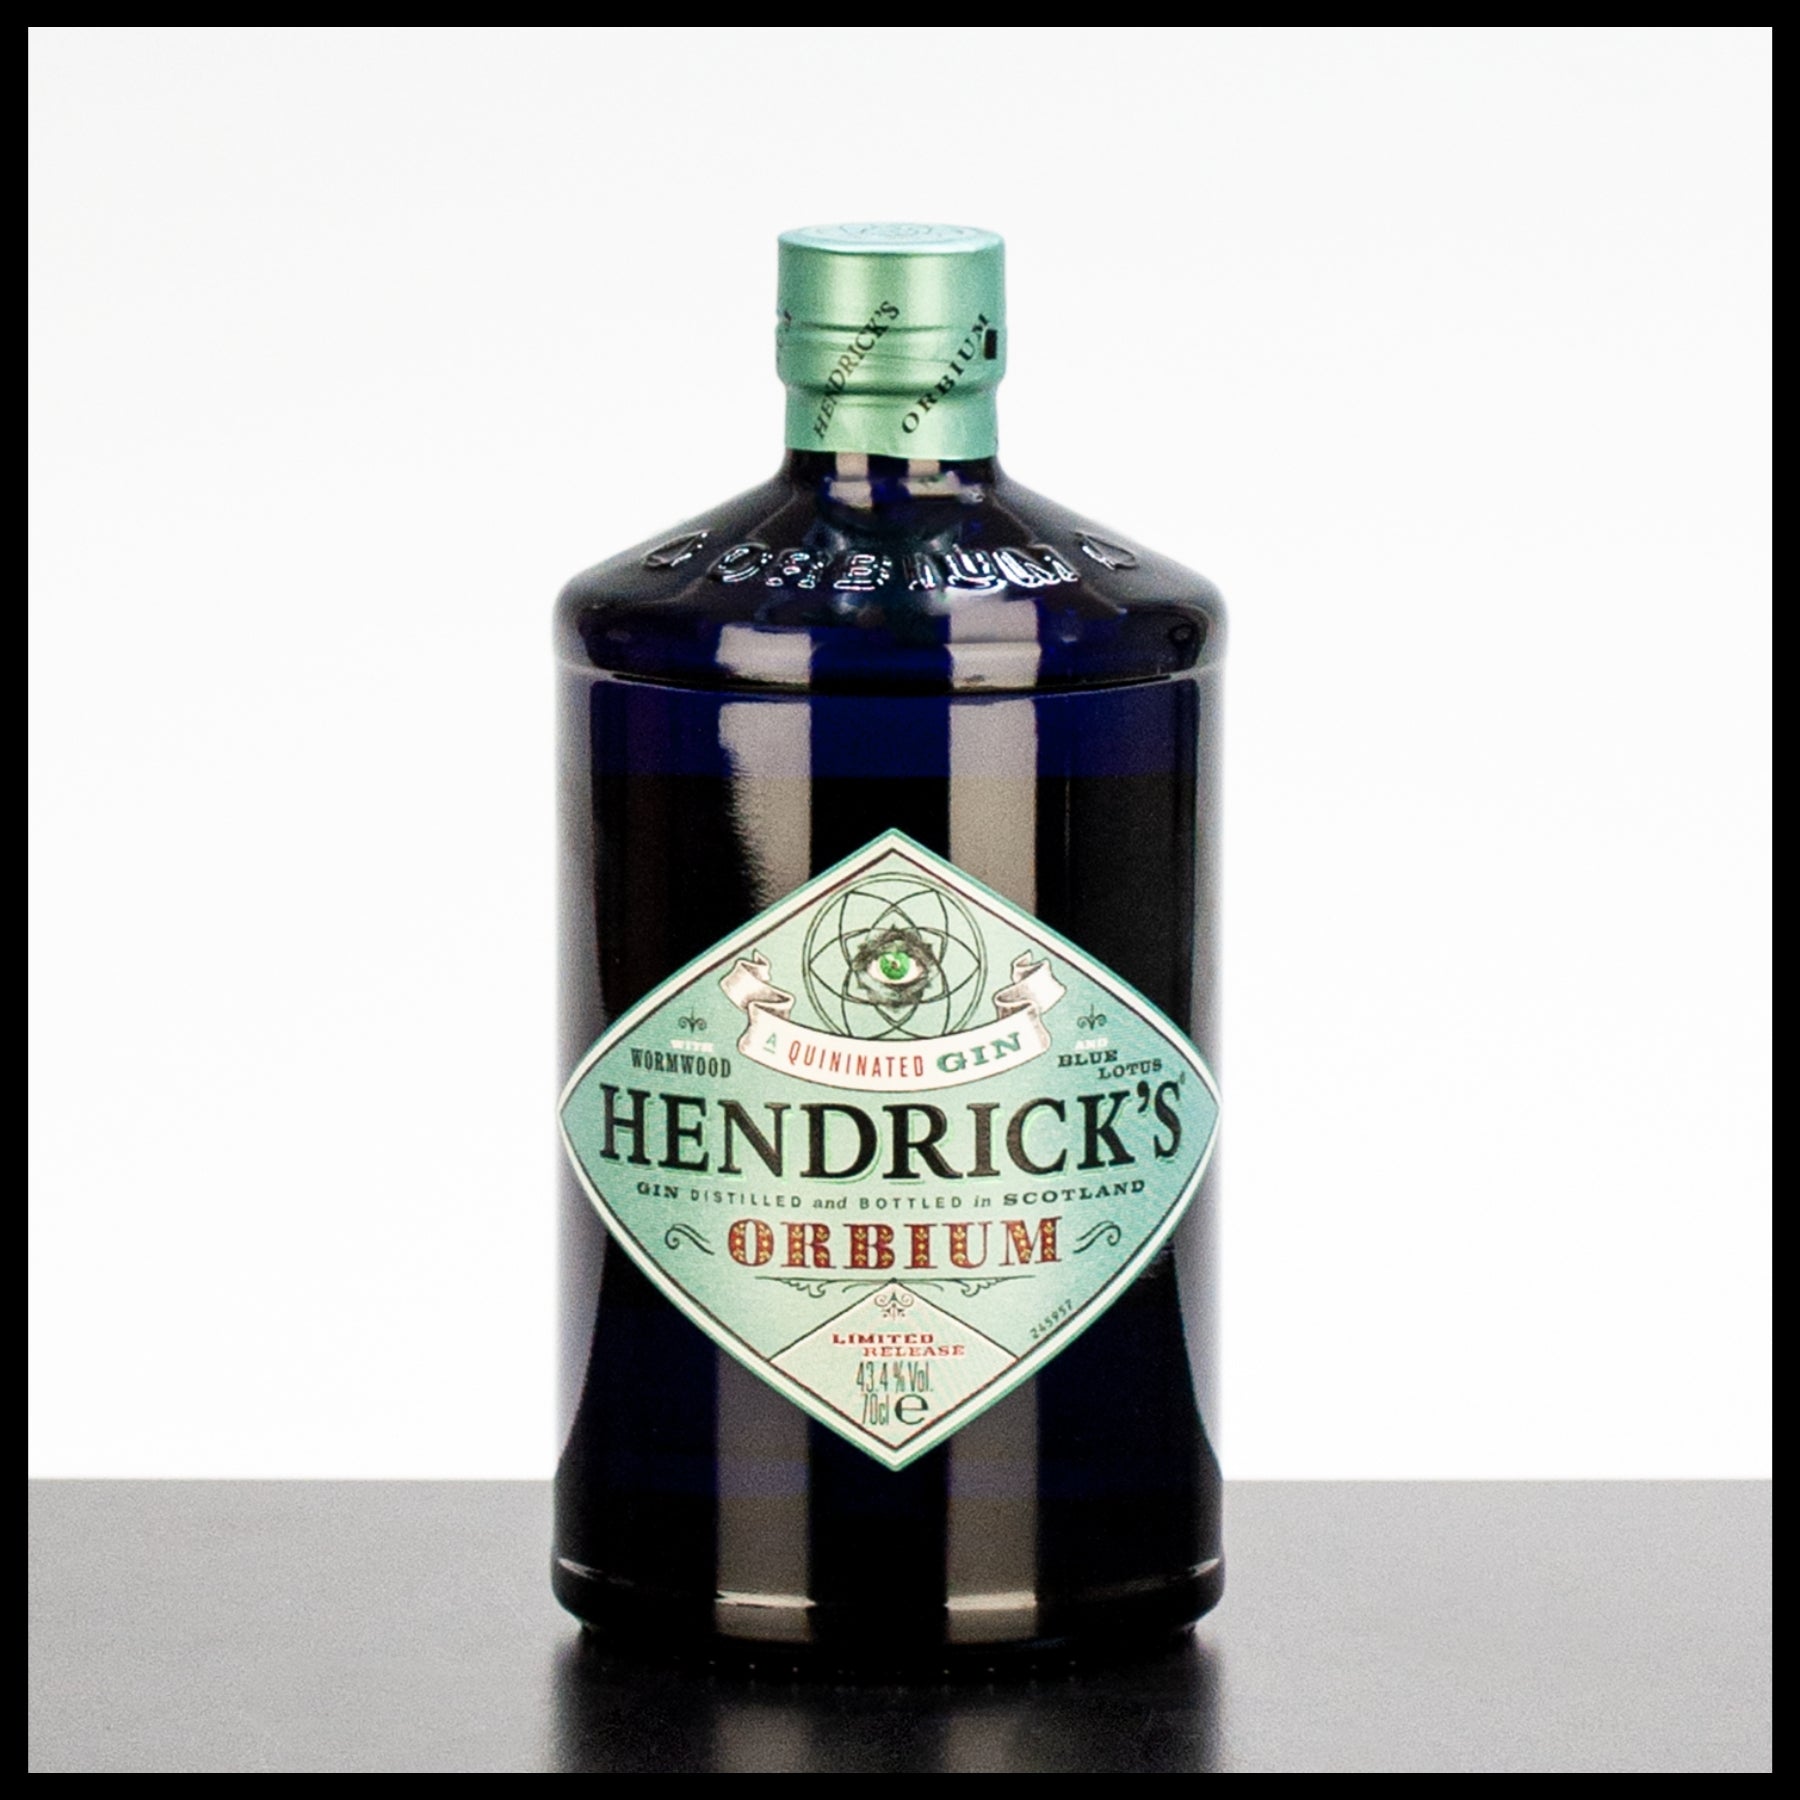 Hendrick's Orbium Gin Limited Release 0,7L - 43,4% Vol.